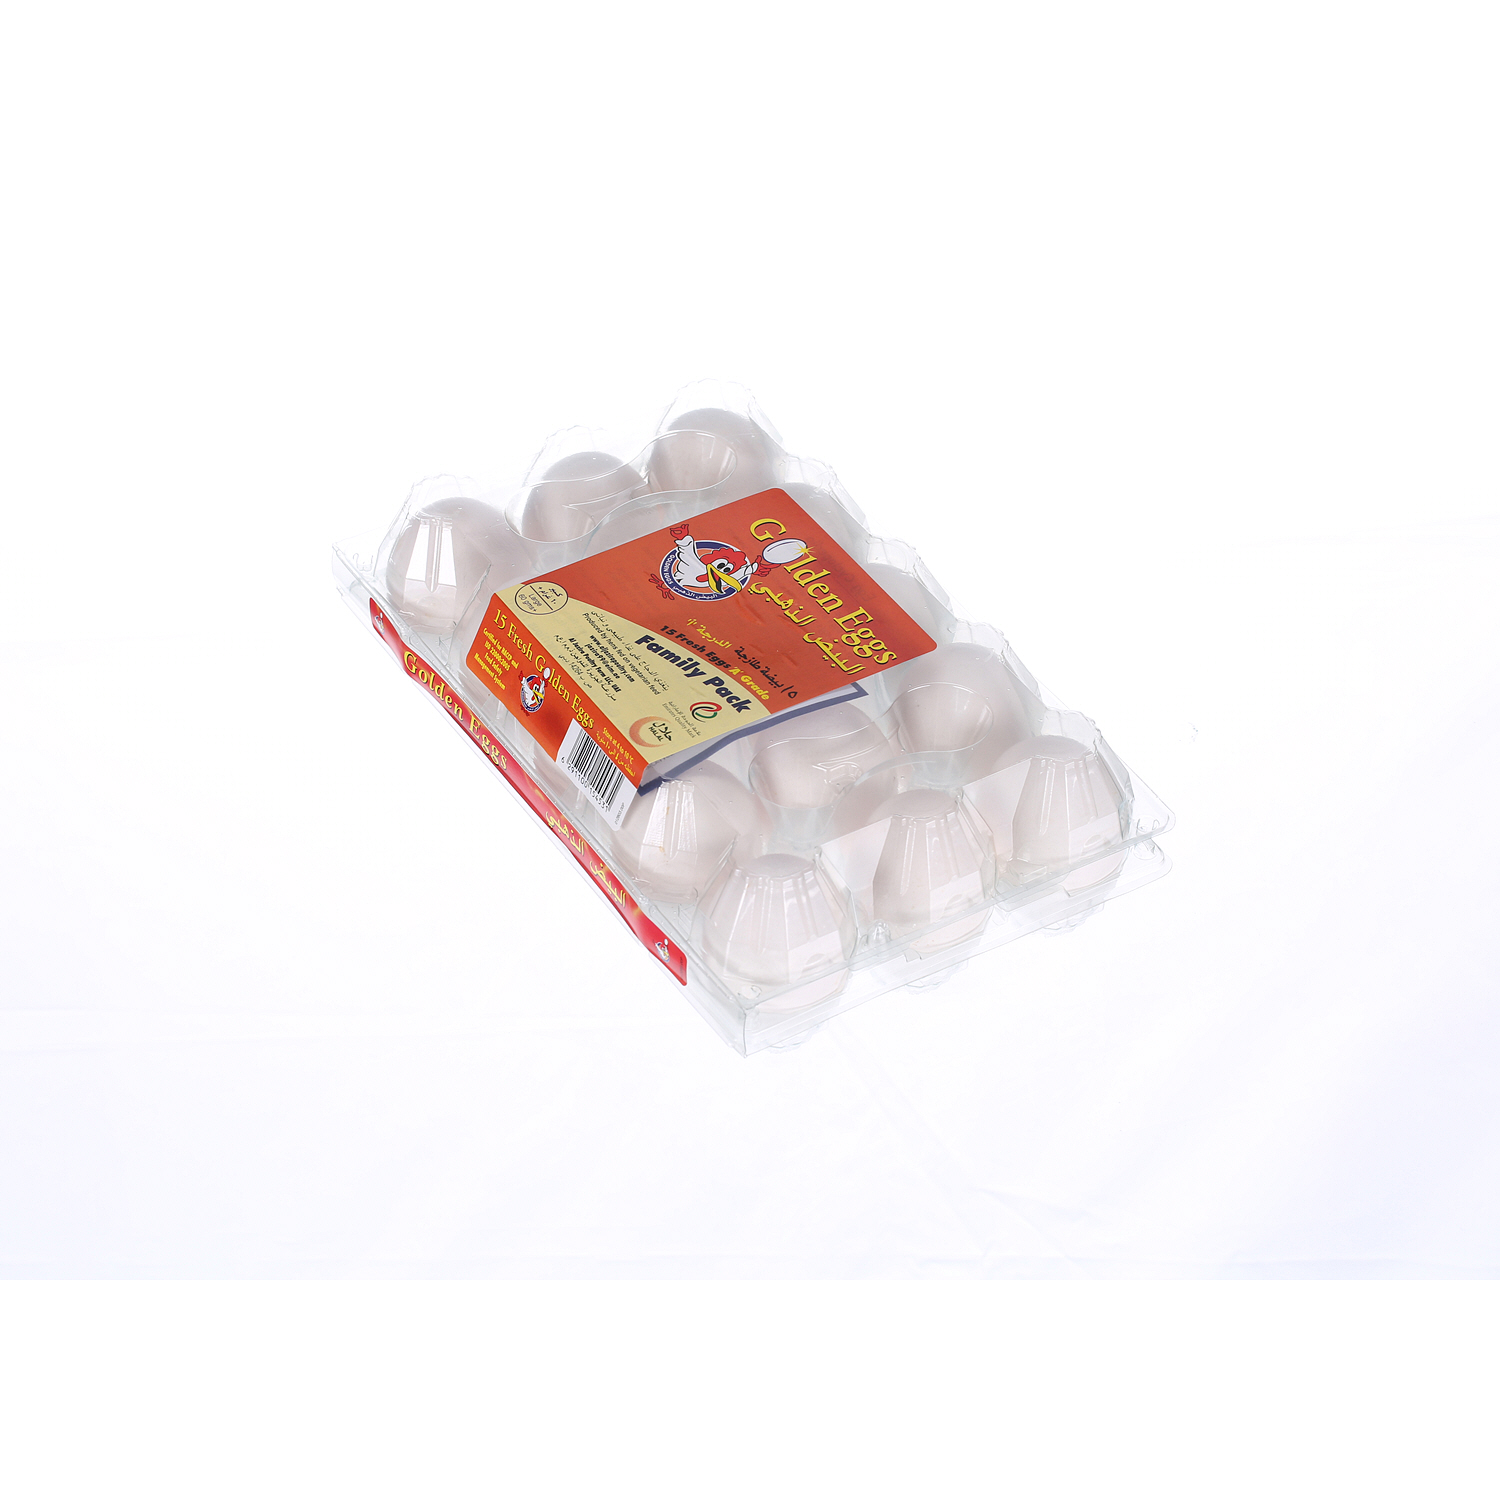 Al Jazira White Eggs Family Box 15 Pack